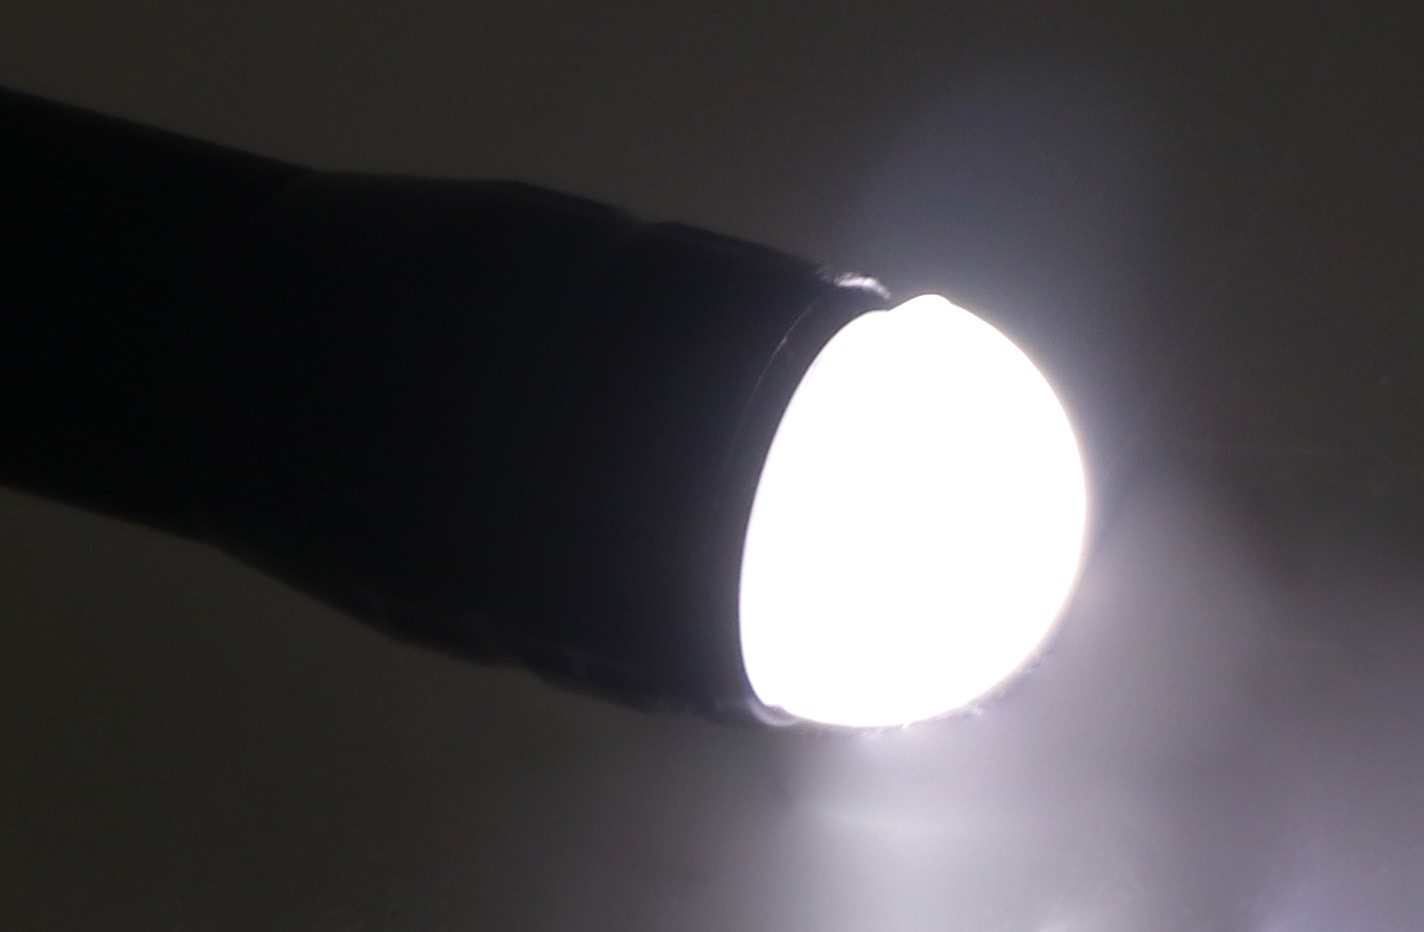 LED-Taschenlampe, WK502, Alu  schwarz, 5 W, CREE LED